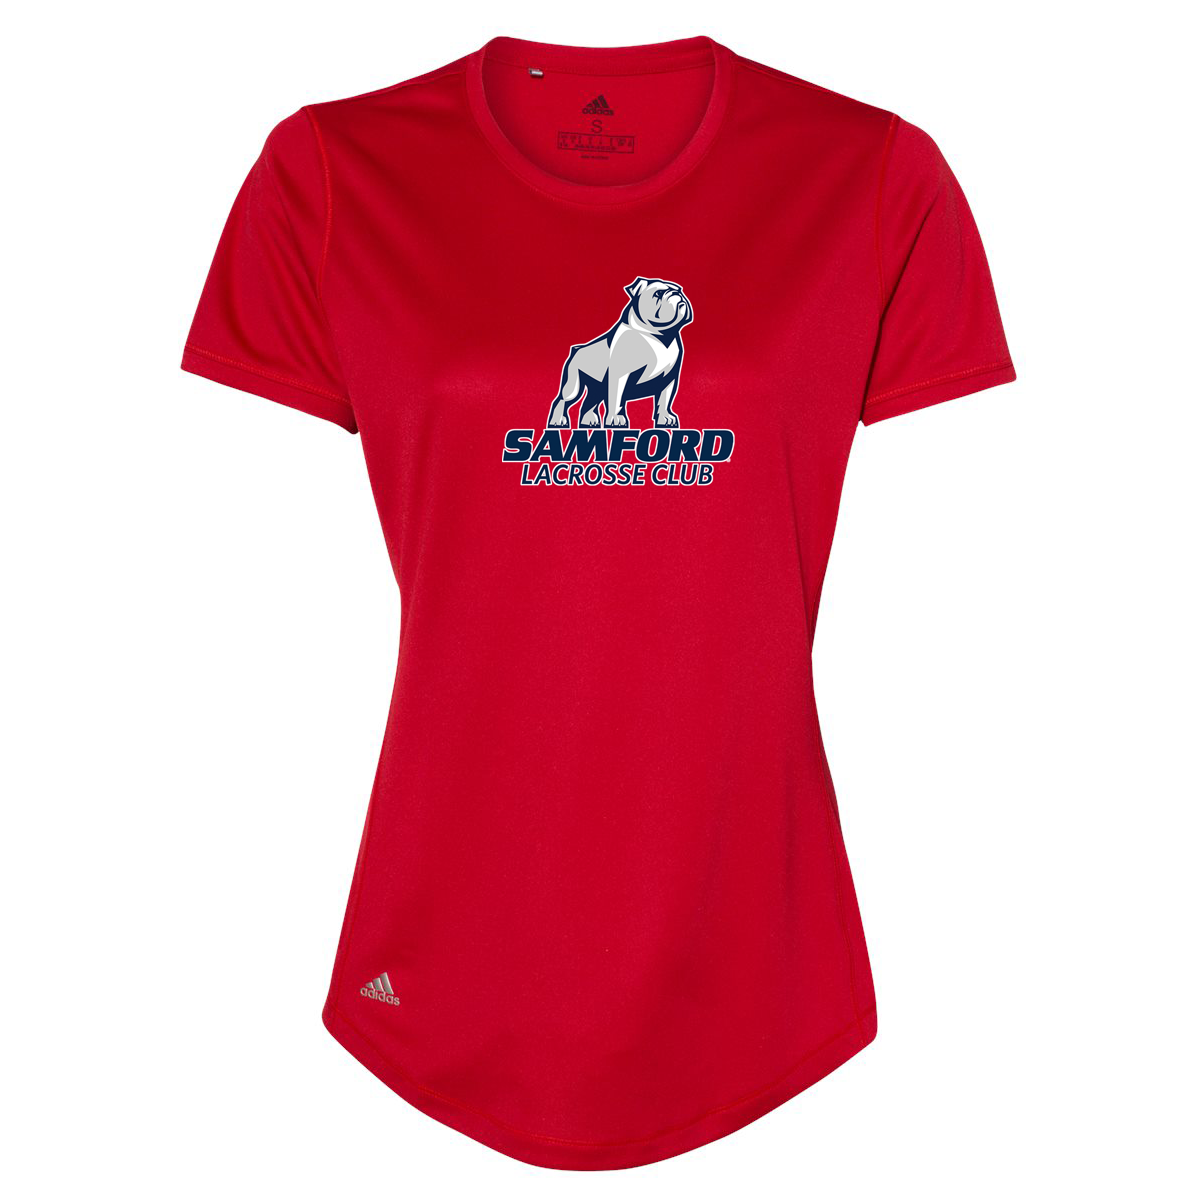 Samford University Lacrosse Club Women's Adidas Sport T-Shirt